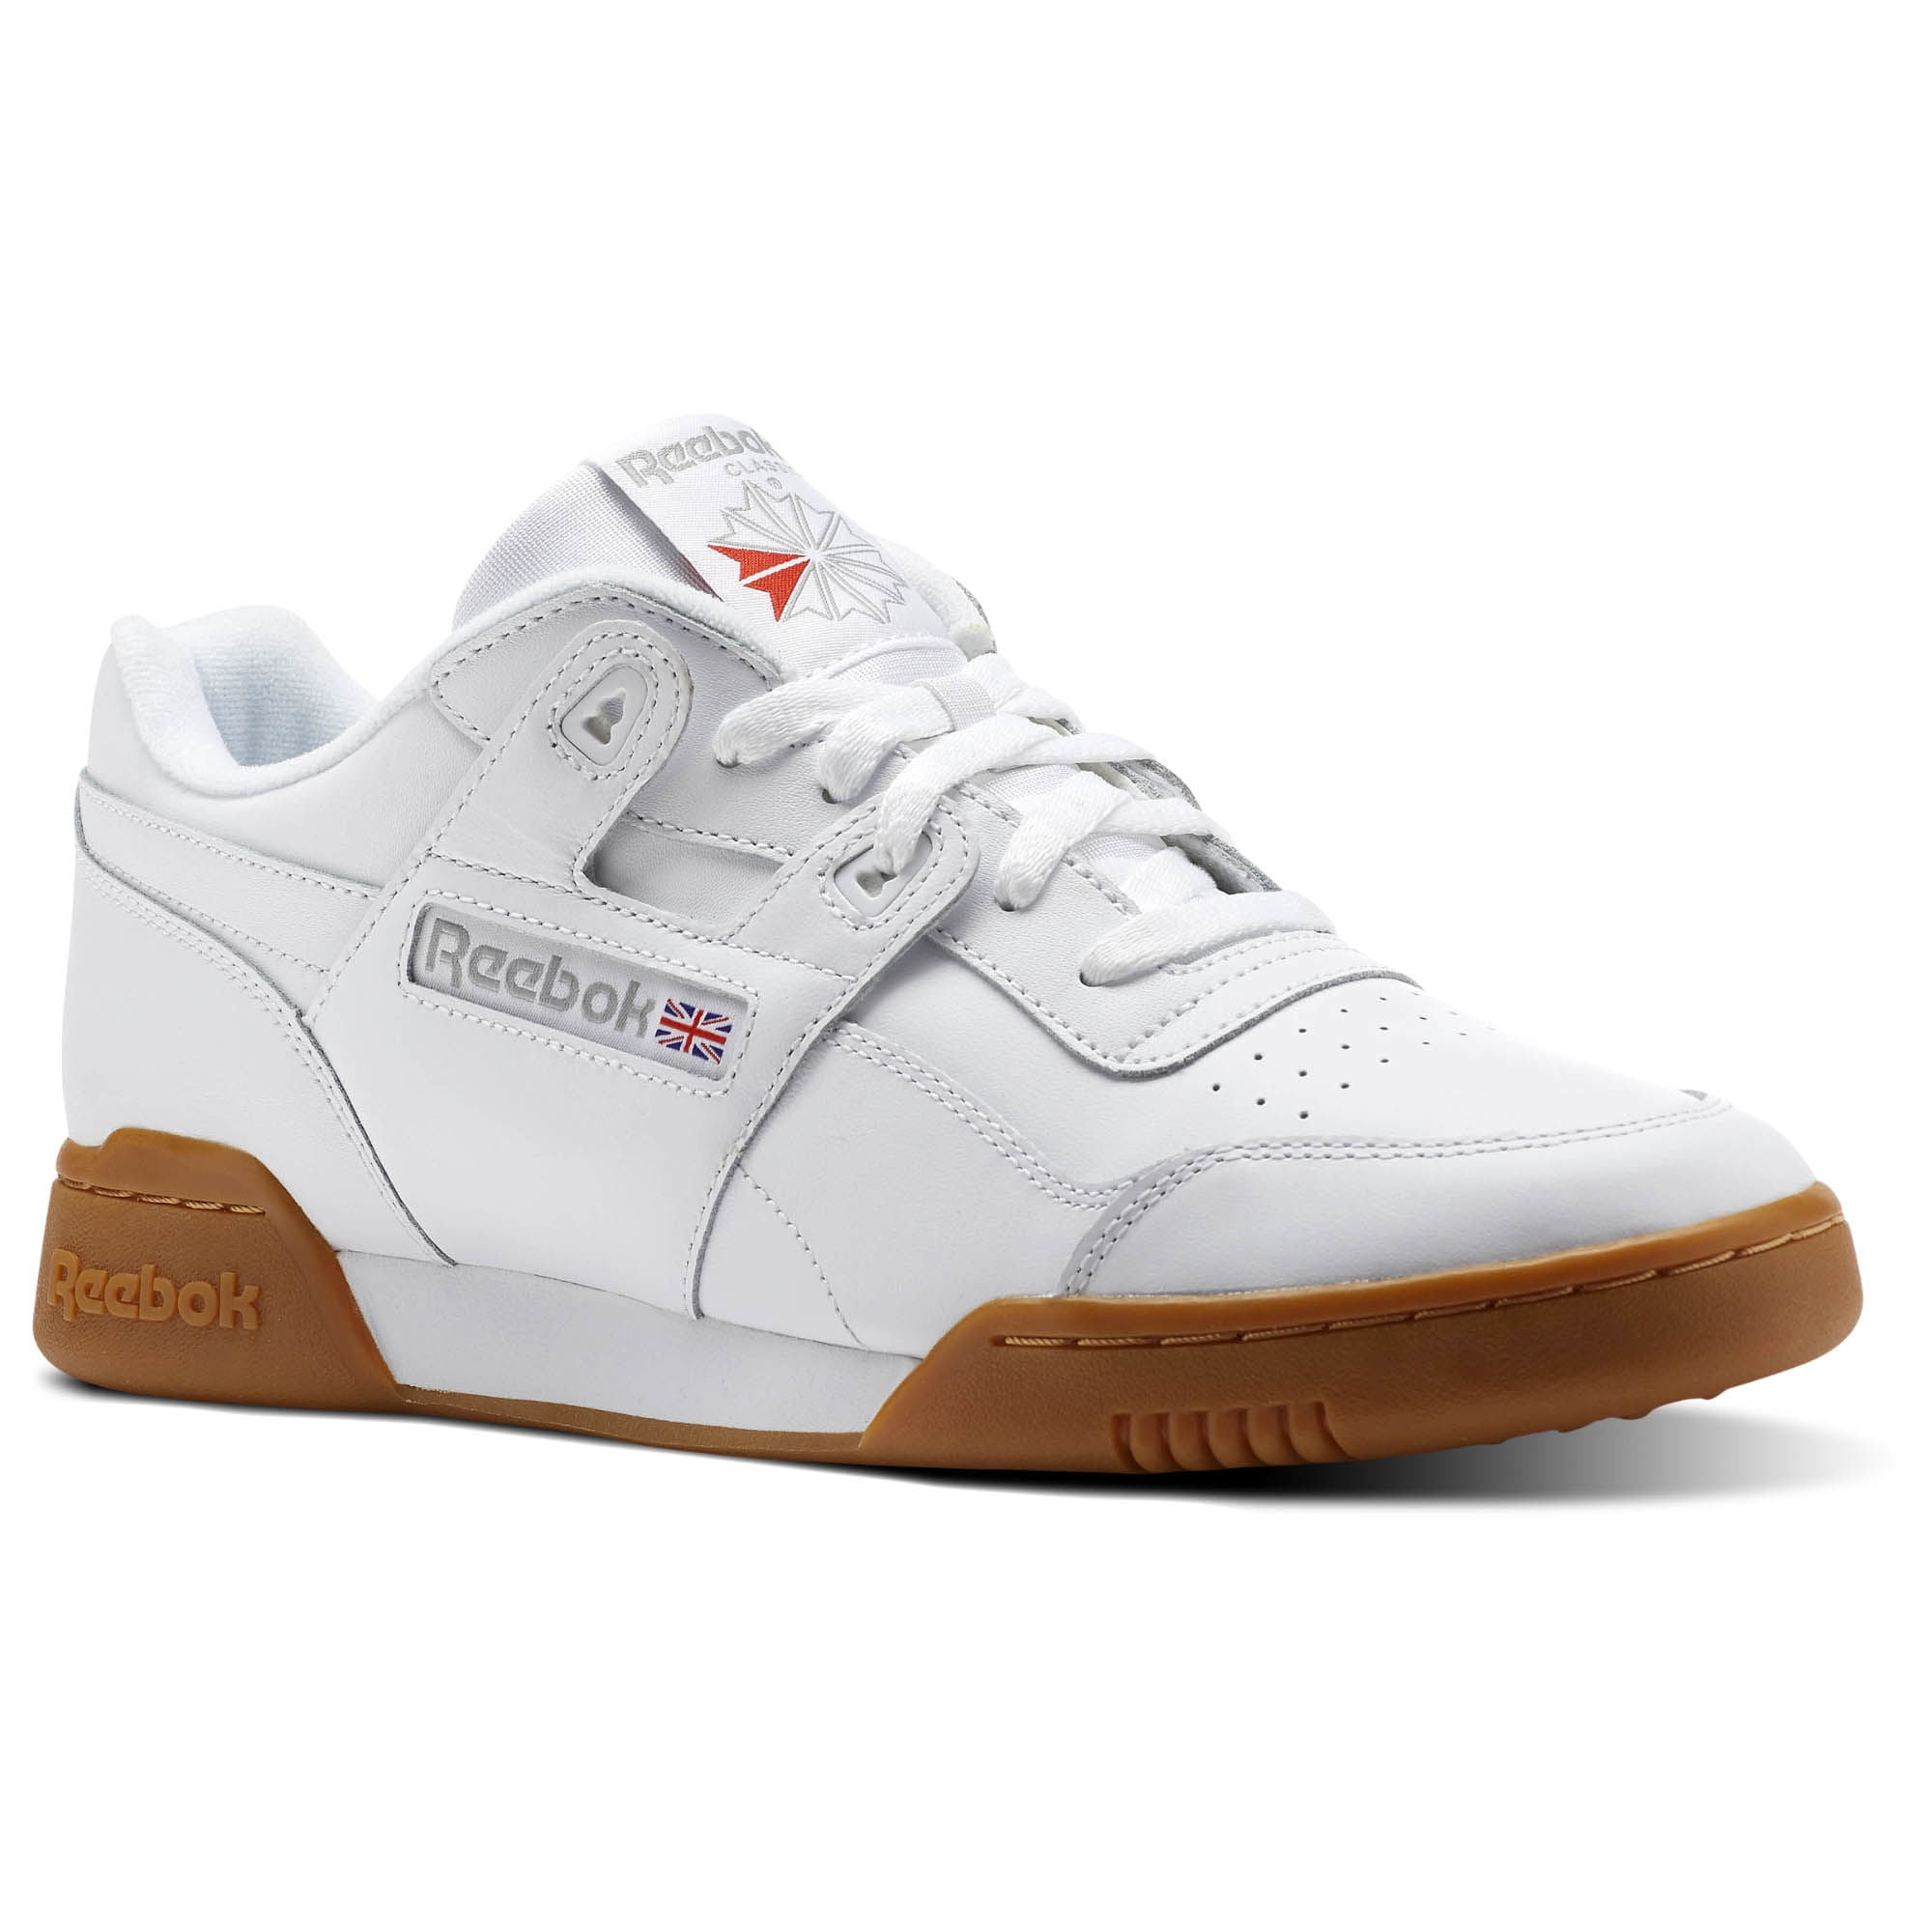 Reebok - Reebok CN2126 : Workout Plus White Gum Classic Men Shoes Sneakers  Trainers (10.5 D(M) US) - Walmart.com - Walmart.com